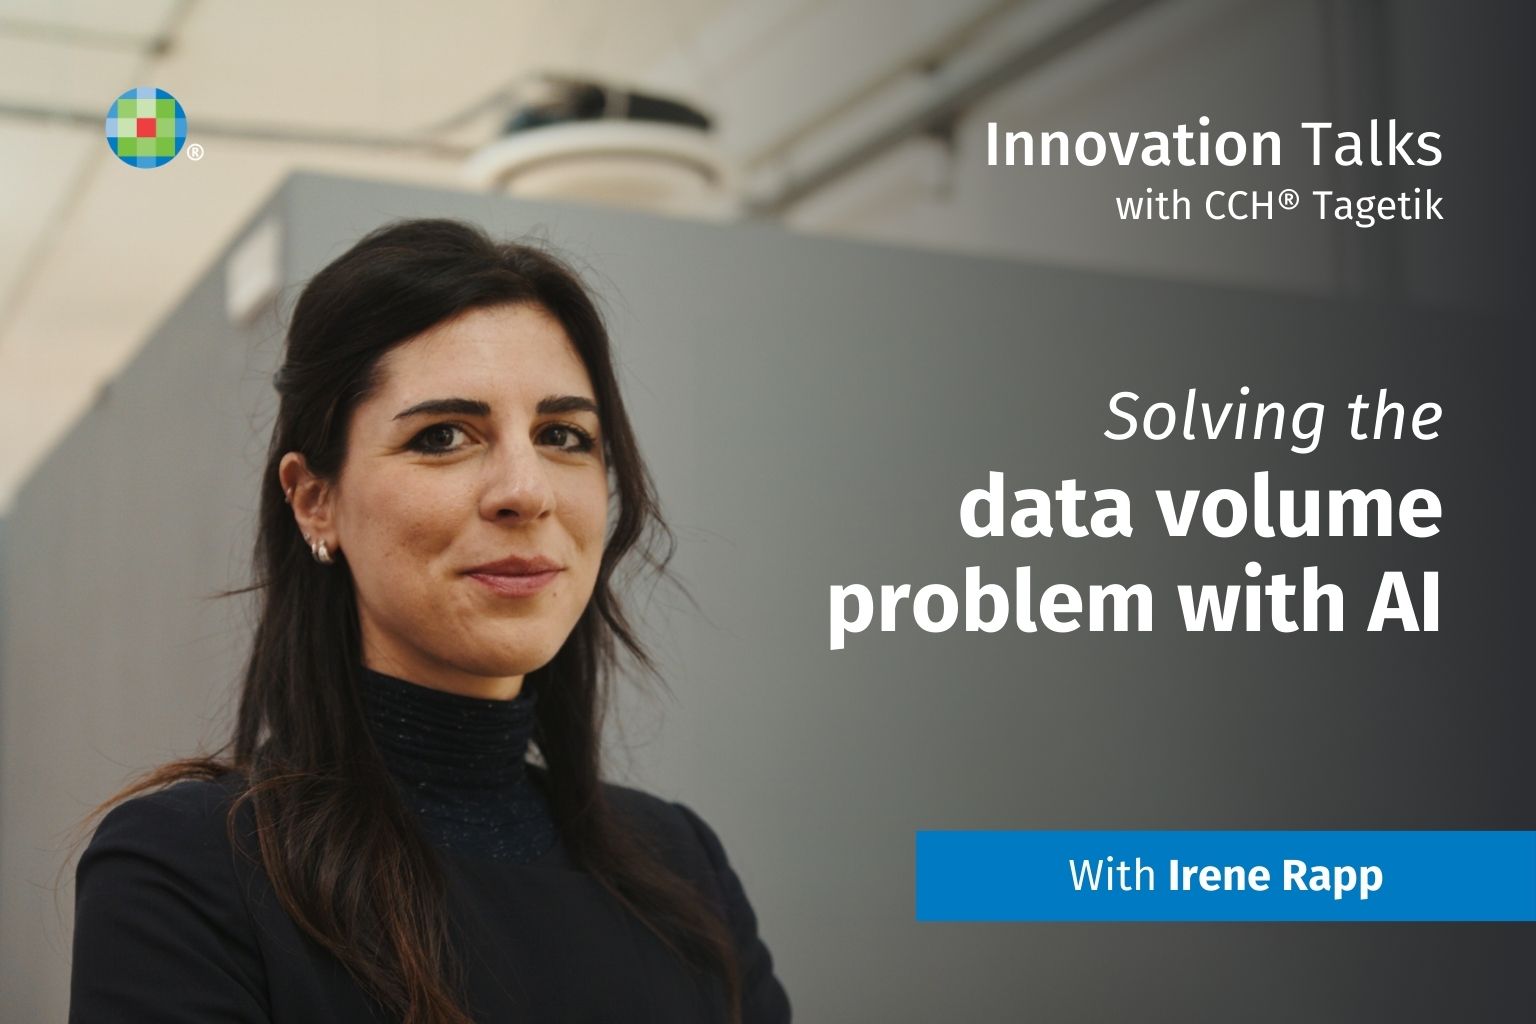 Solving data volume problem